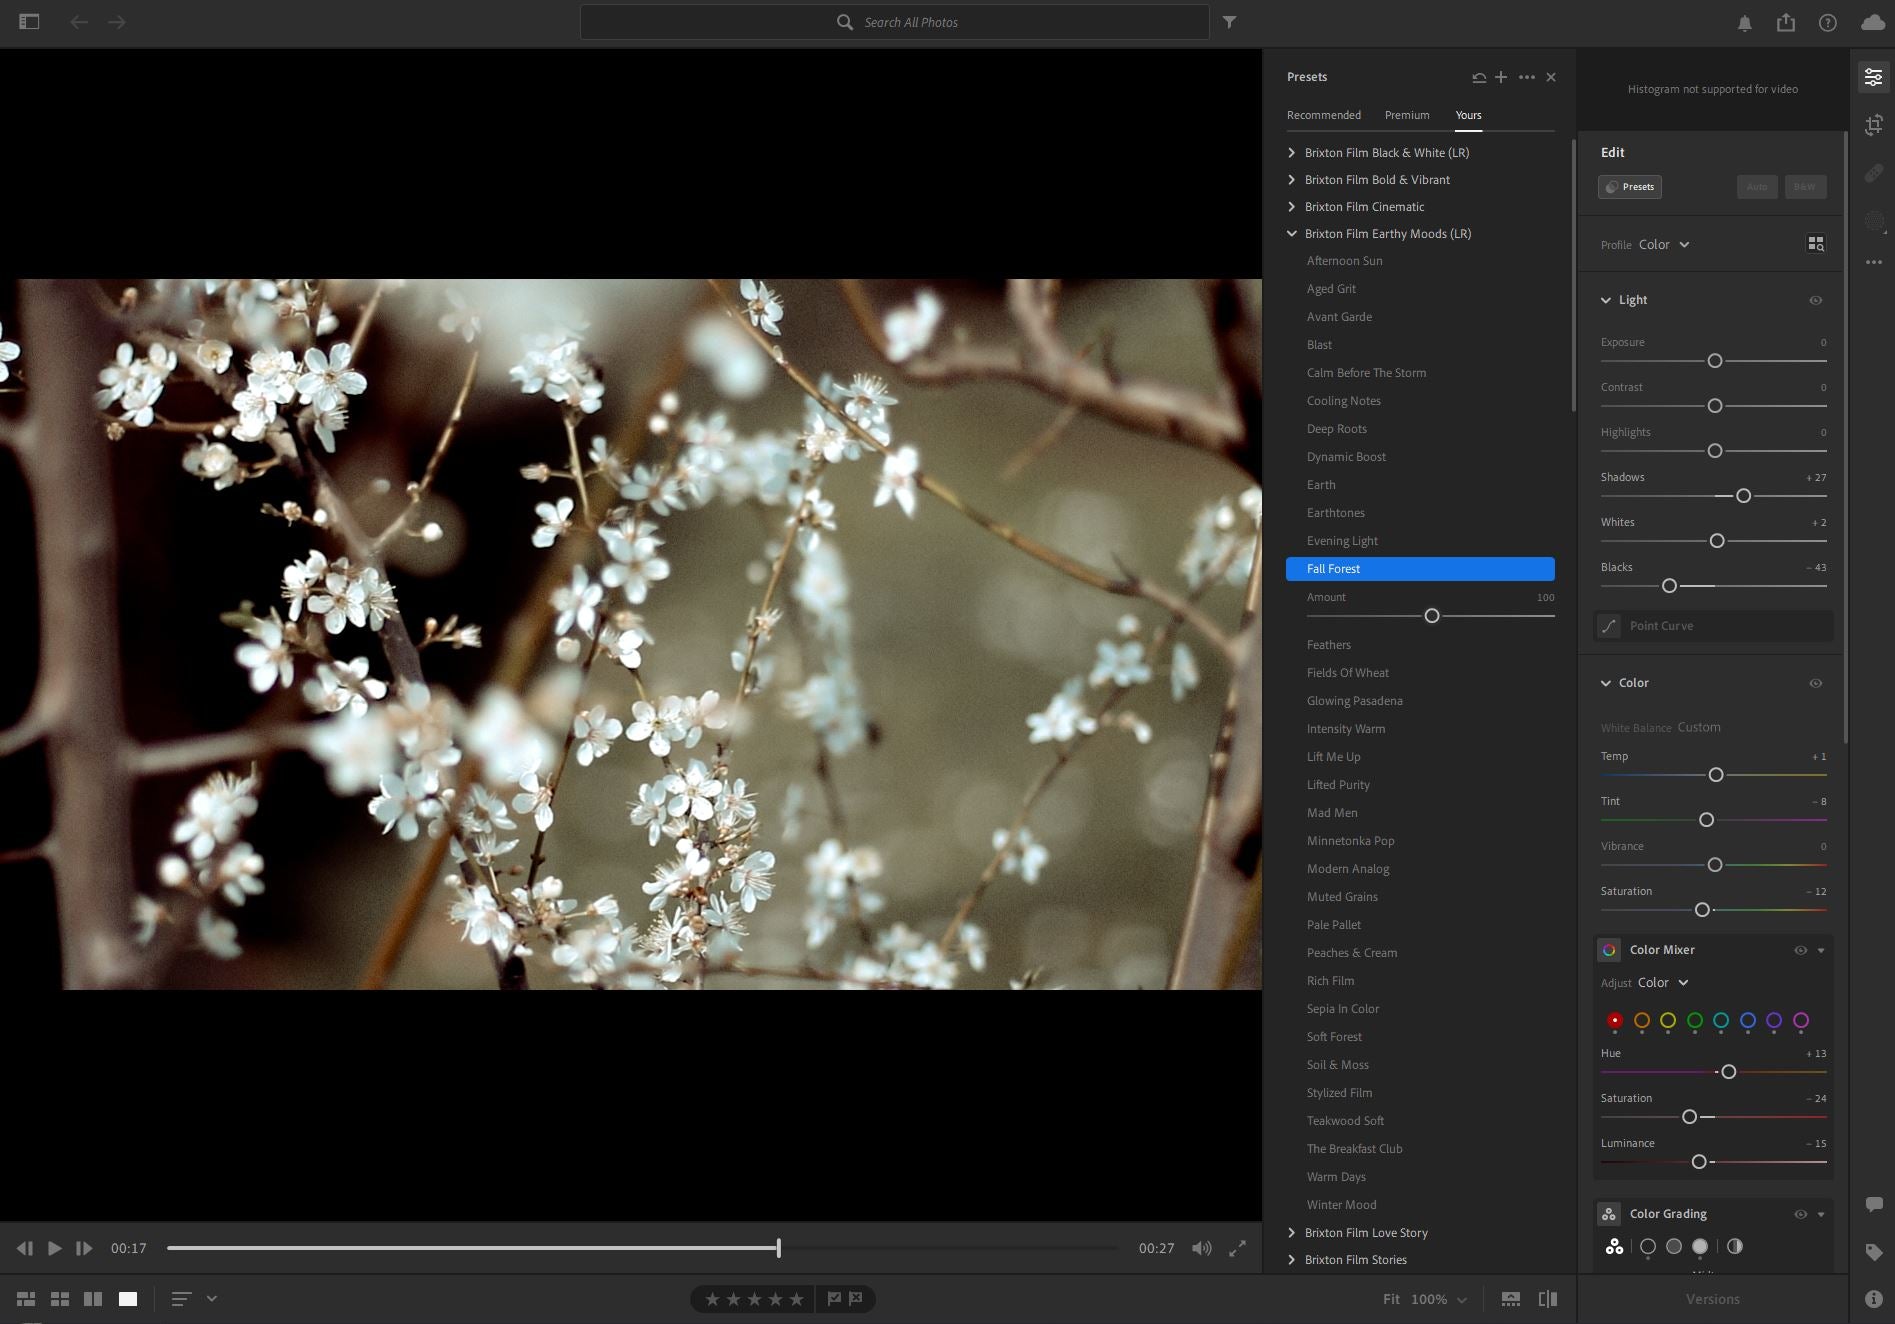 New to Lightroom: Video Editing & Preset Amount